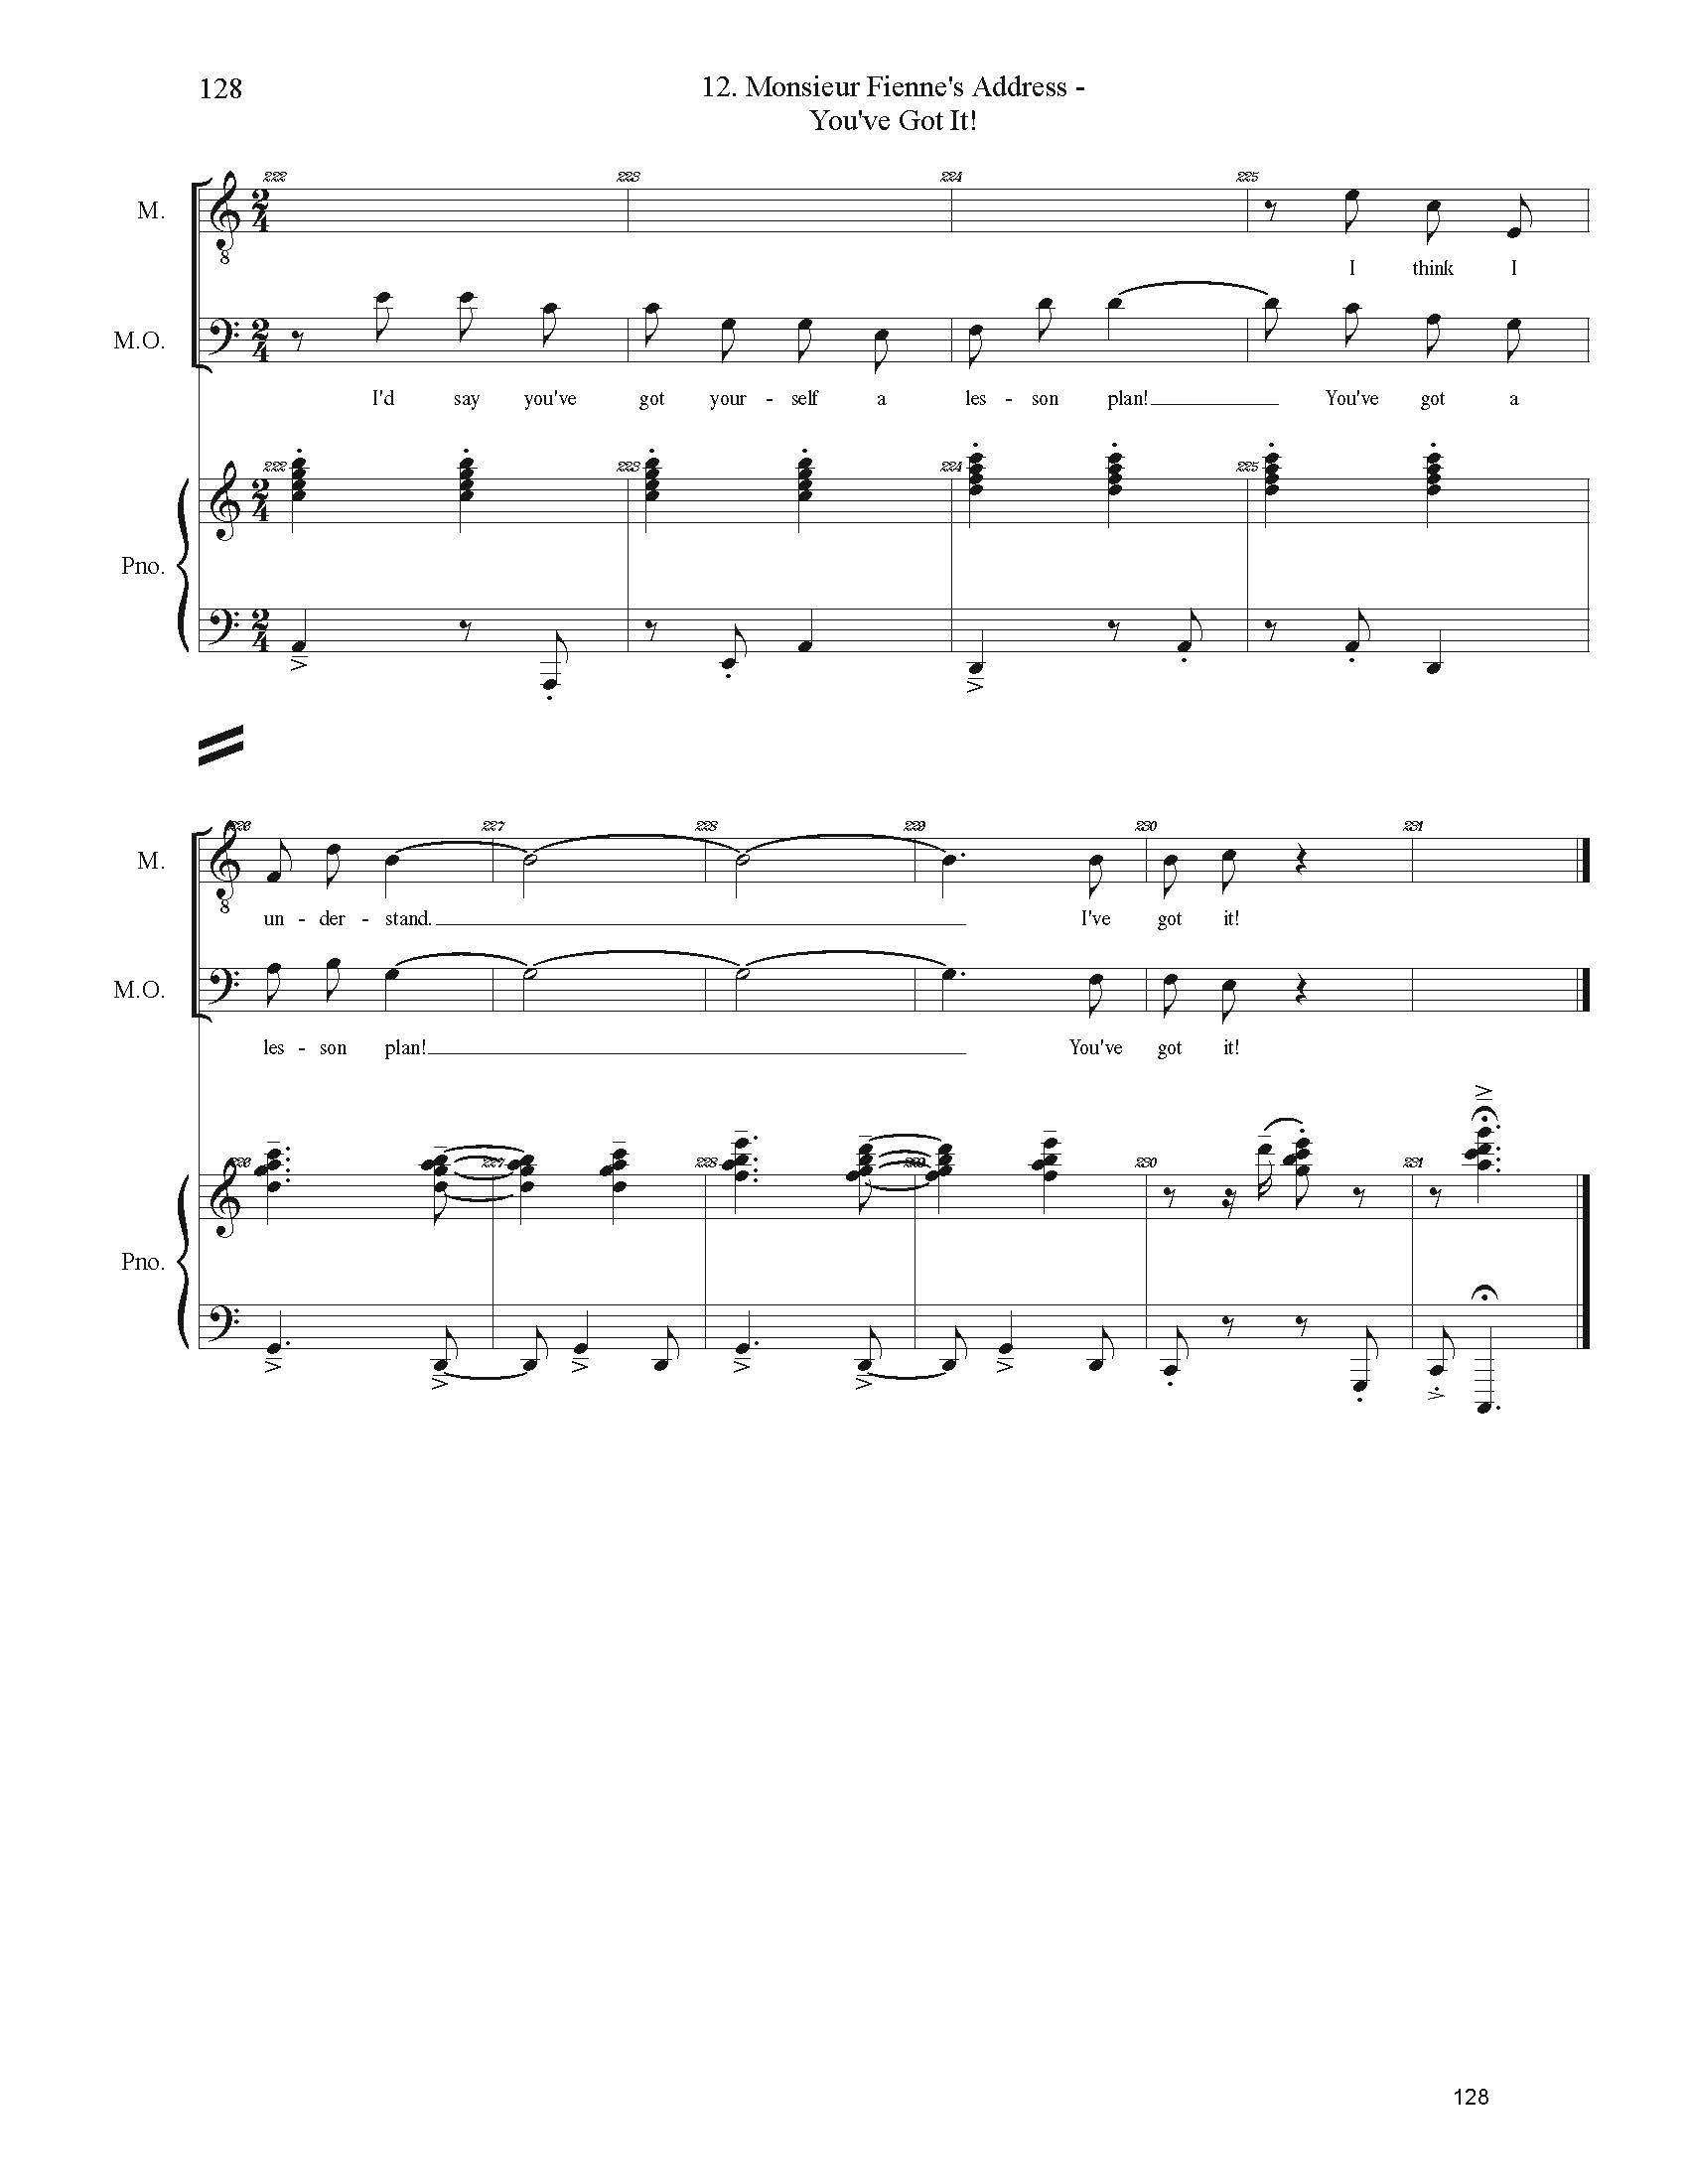 FULL PIANO VOCAL SCORE DRAFT 1 - Score_Page_128.jpg